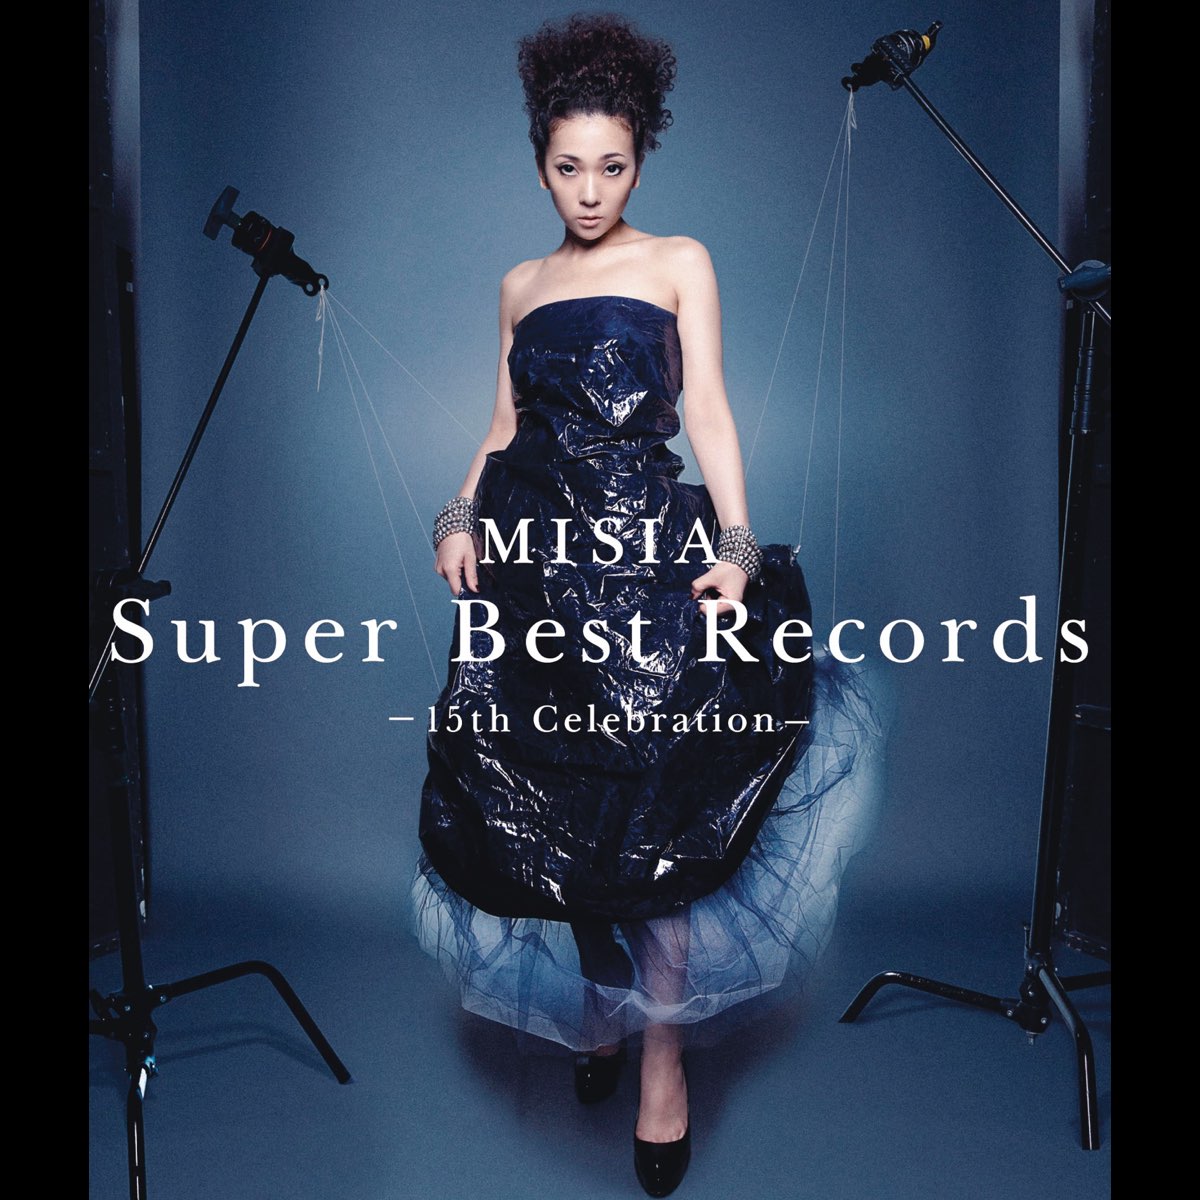 Super Best Records - 15th Celebration - Album by MISIA - Apple Music